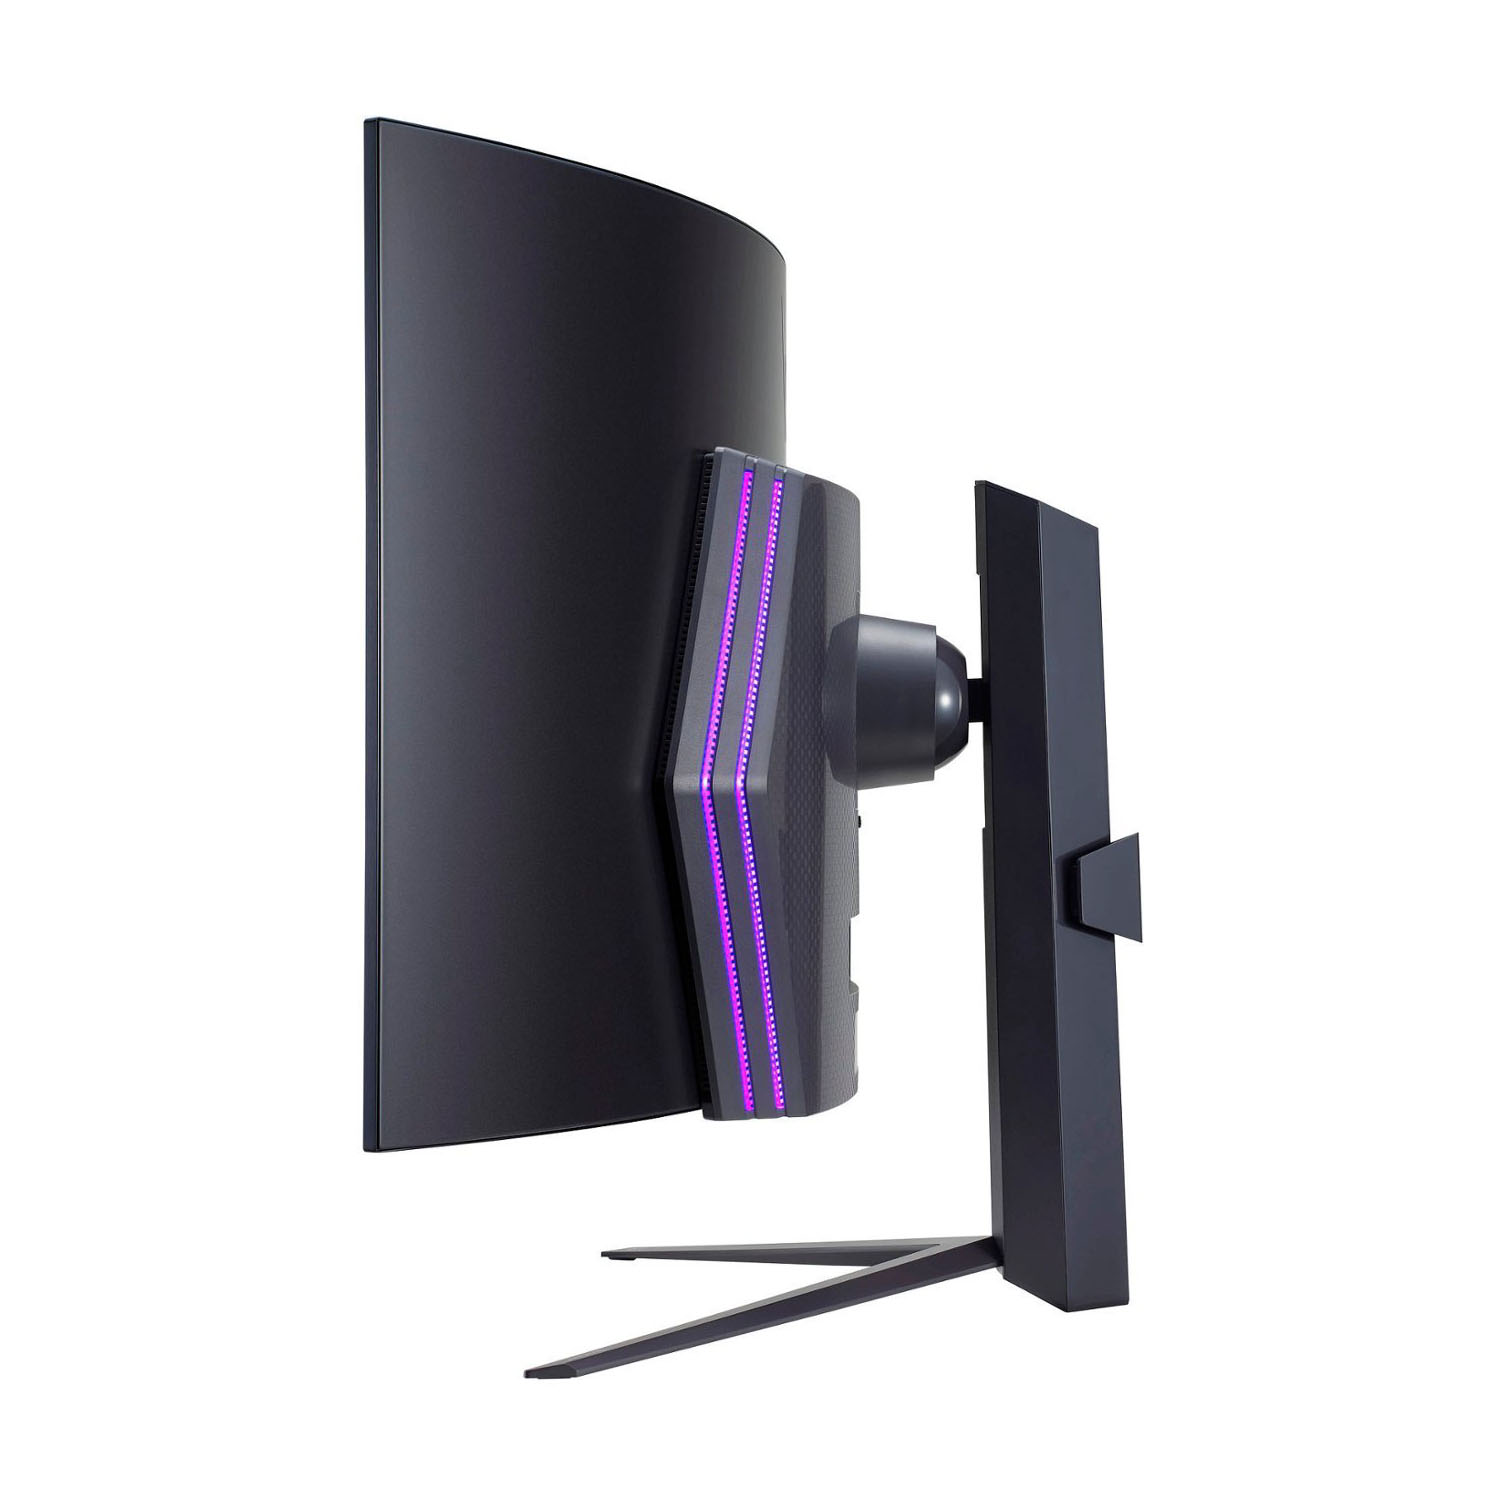 LG - Monitor para juegos UltraGear OLED curvo WQHD 240 Hz 0,03 ms compatible con FreeSync y NVIDIA G-Sync con HDR10 - Negro